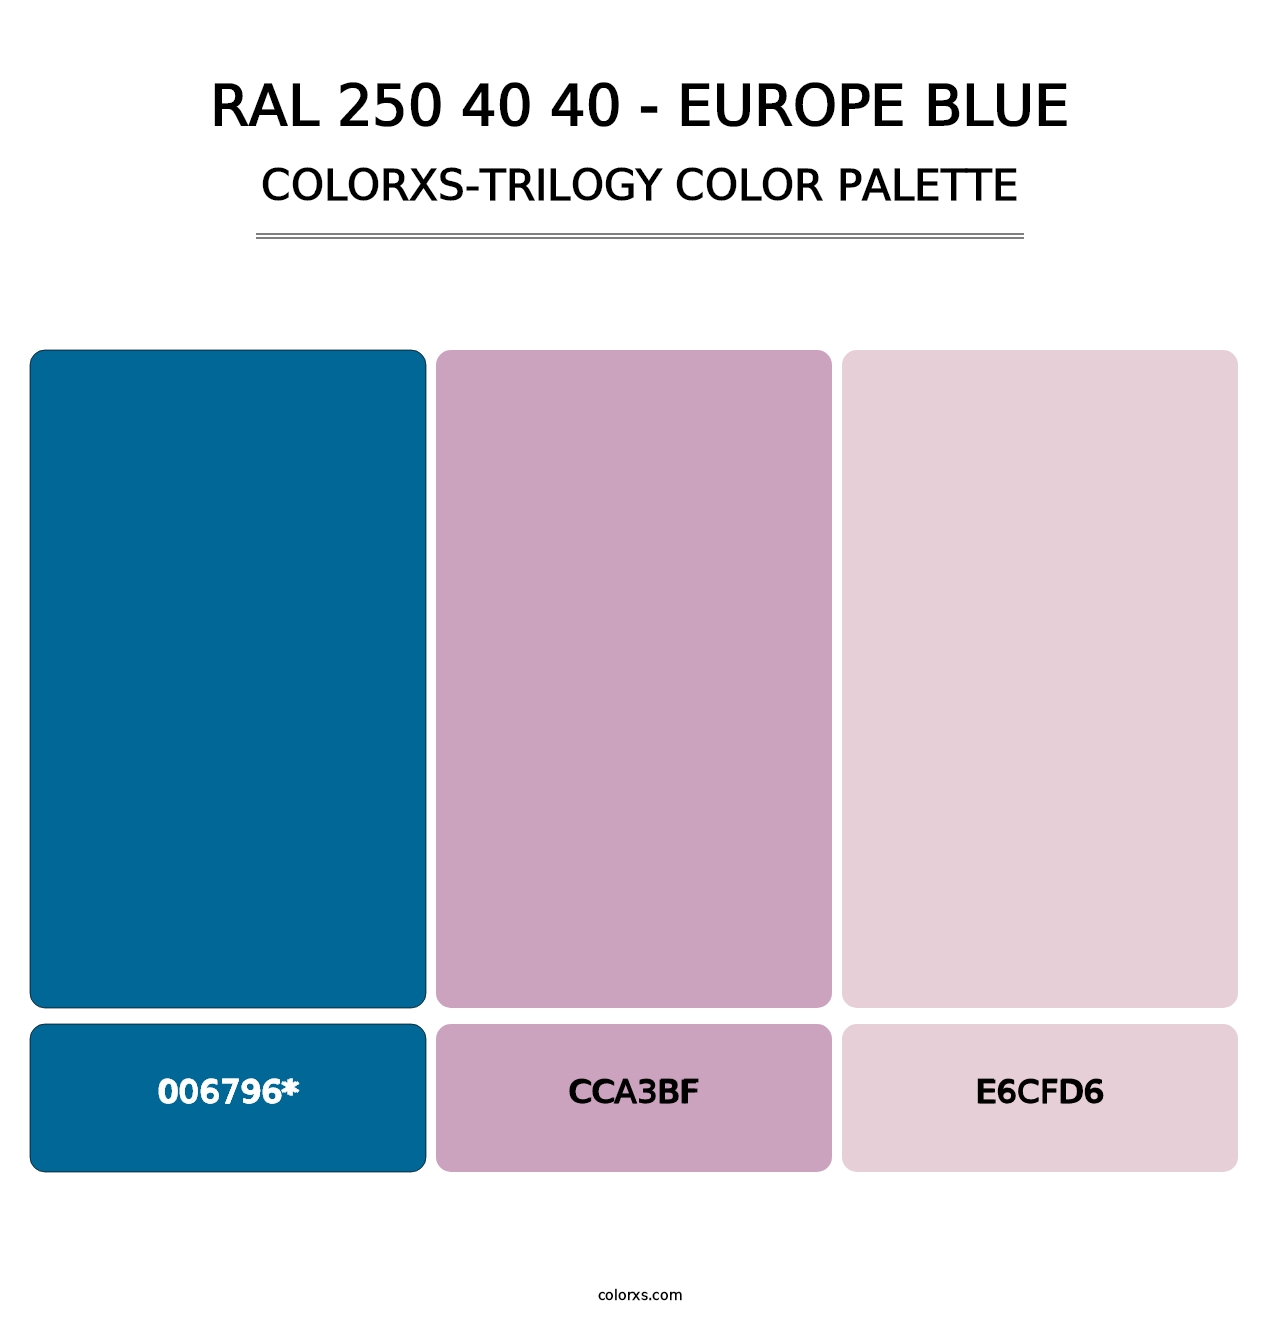 RAL 250 40 40 - Europe Blue - Colorxs Trilogy Palette